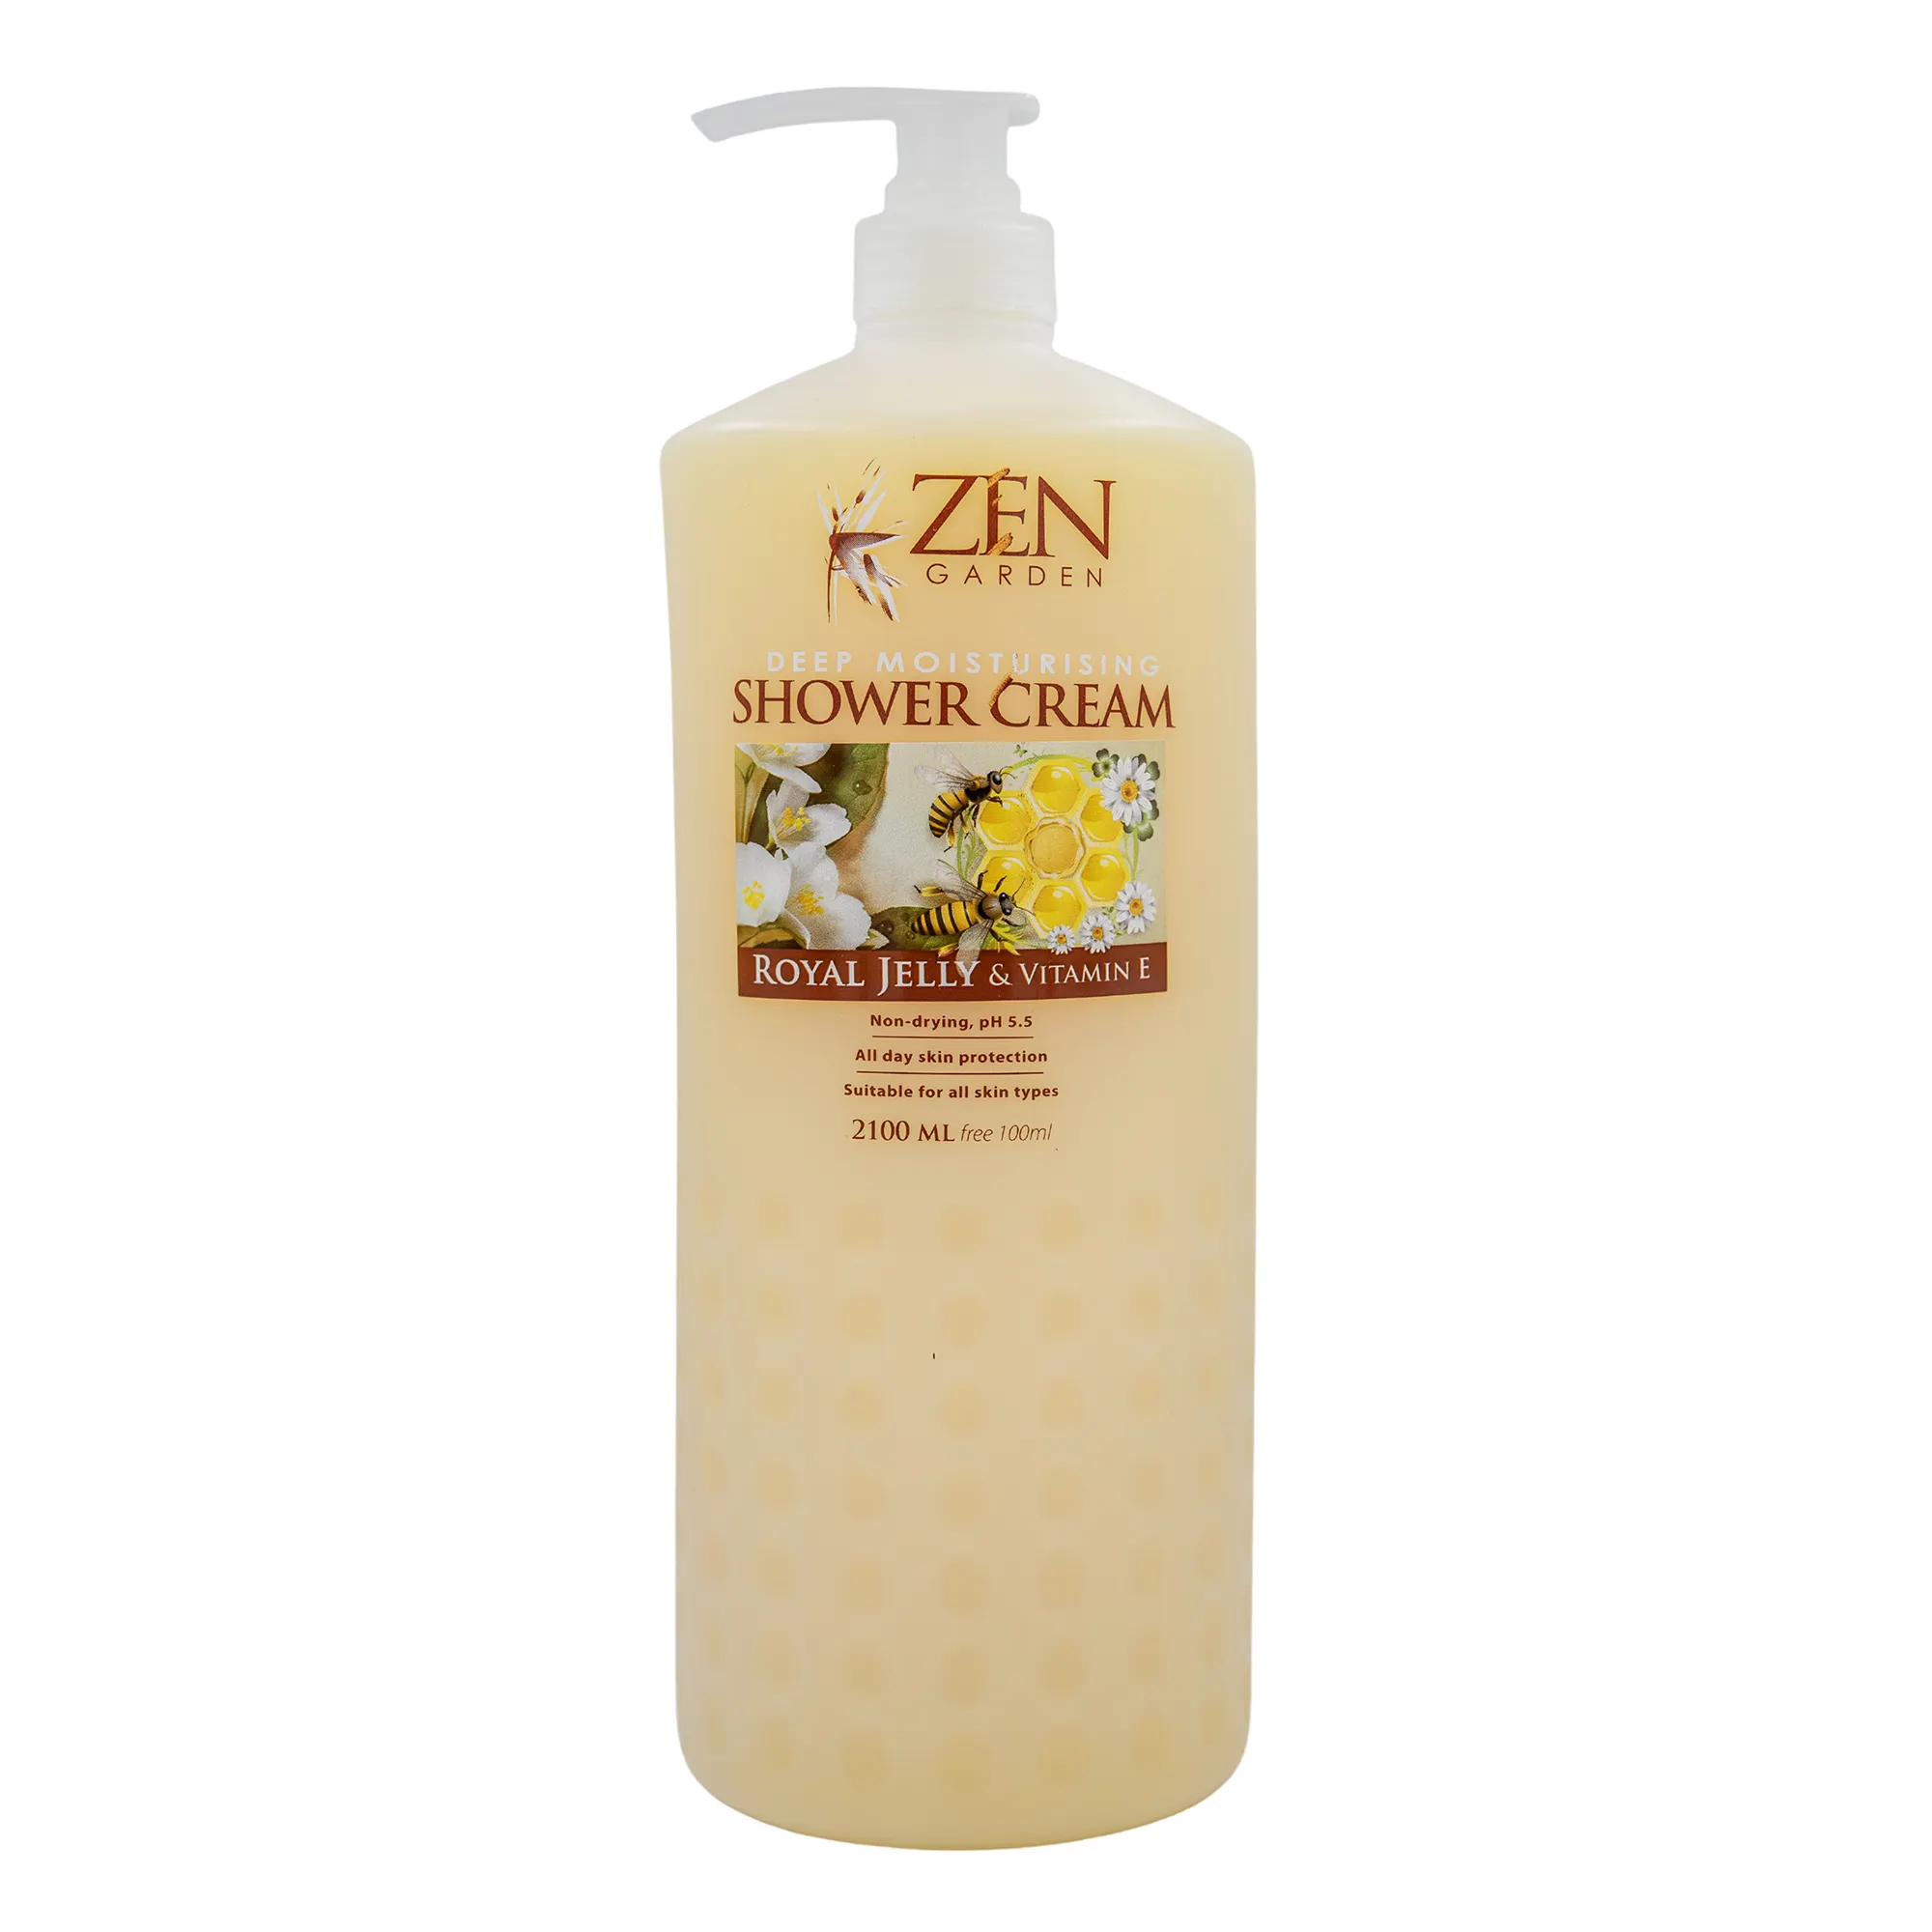 Zen garden Shower Cream Big size best seller shower gel nourish skin to be soft Wholesale Top selling cheap